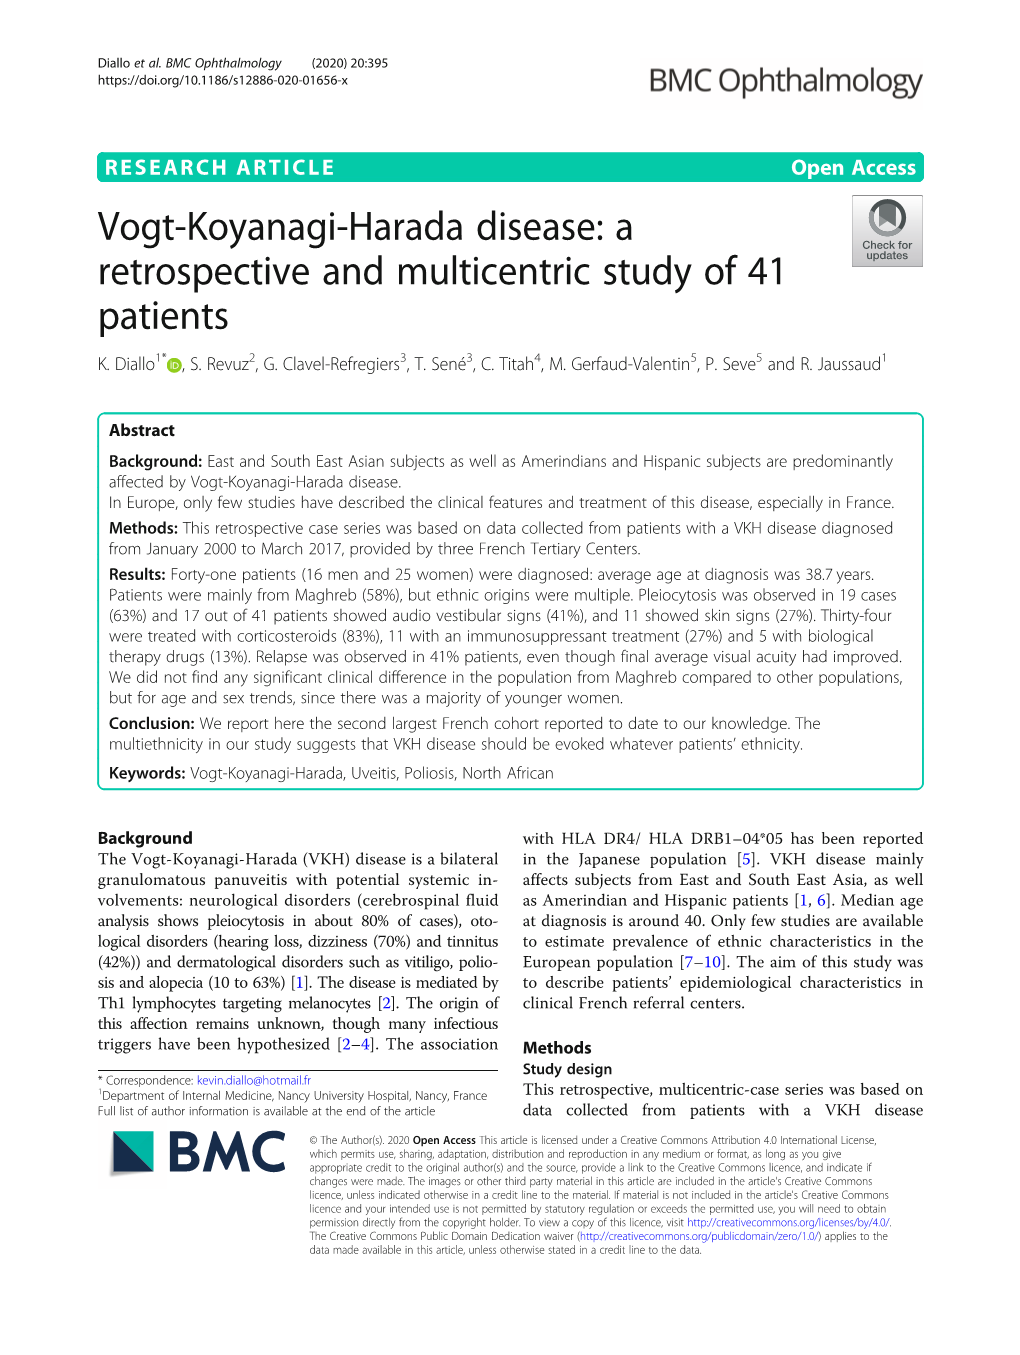 Vogt-Koyanagi-Harada Disease: a Retrospective and Multicentric Study of 41 Patients K